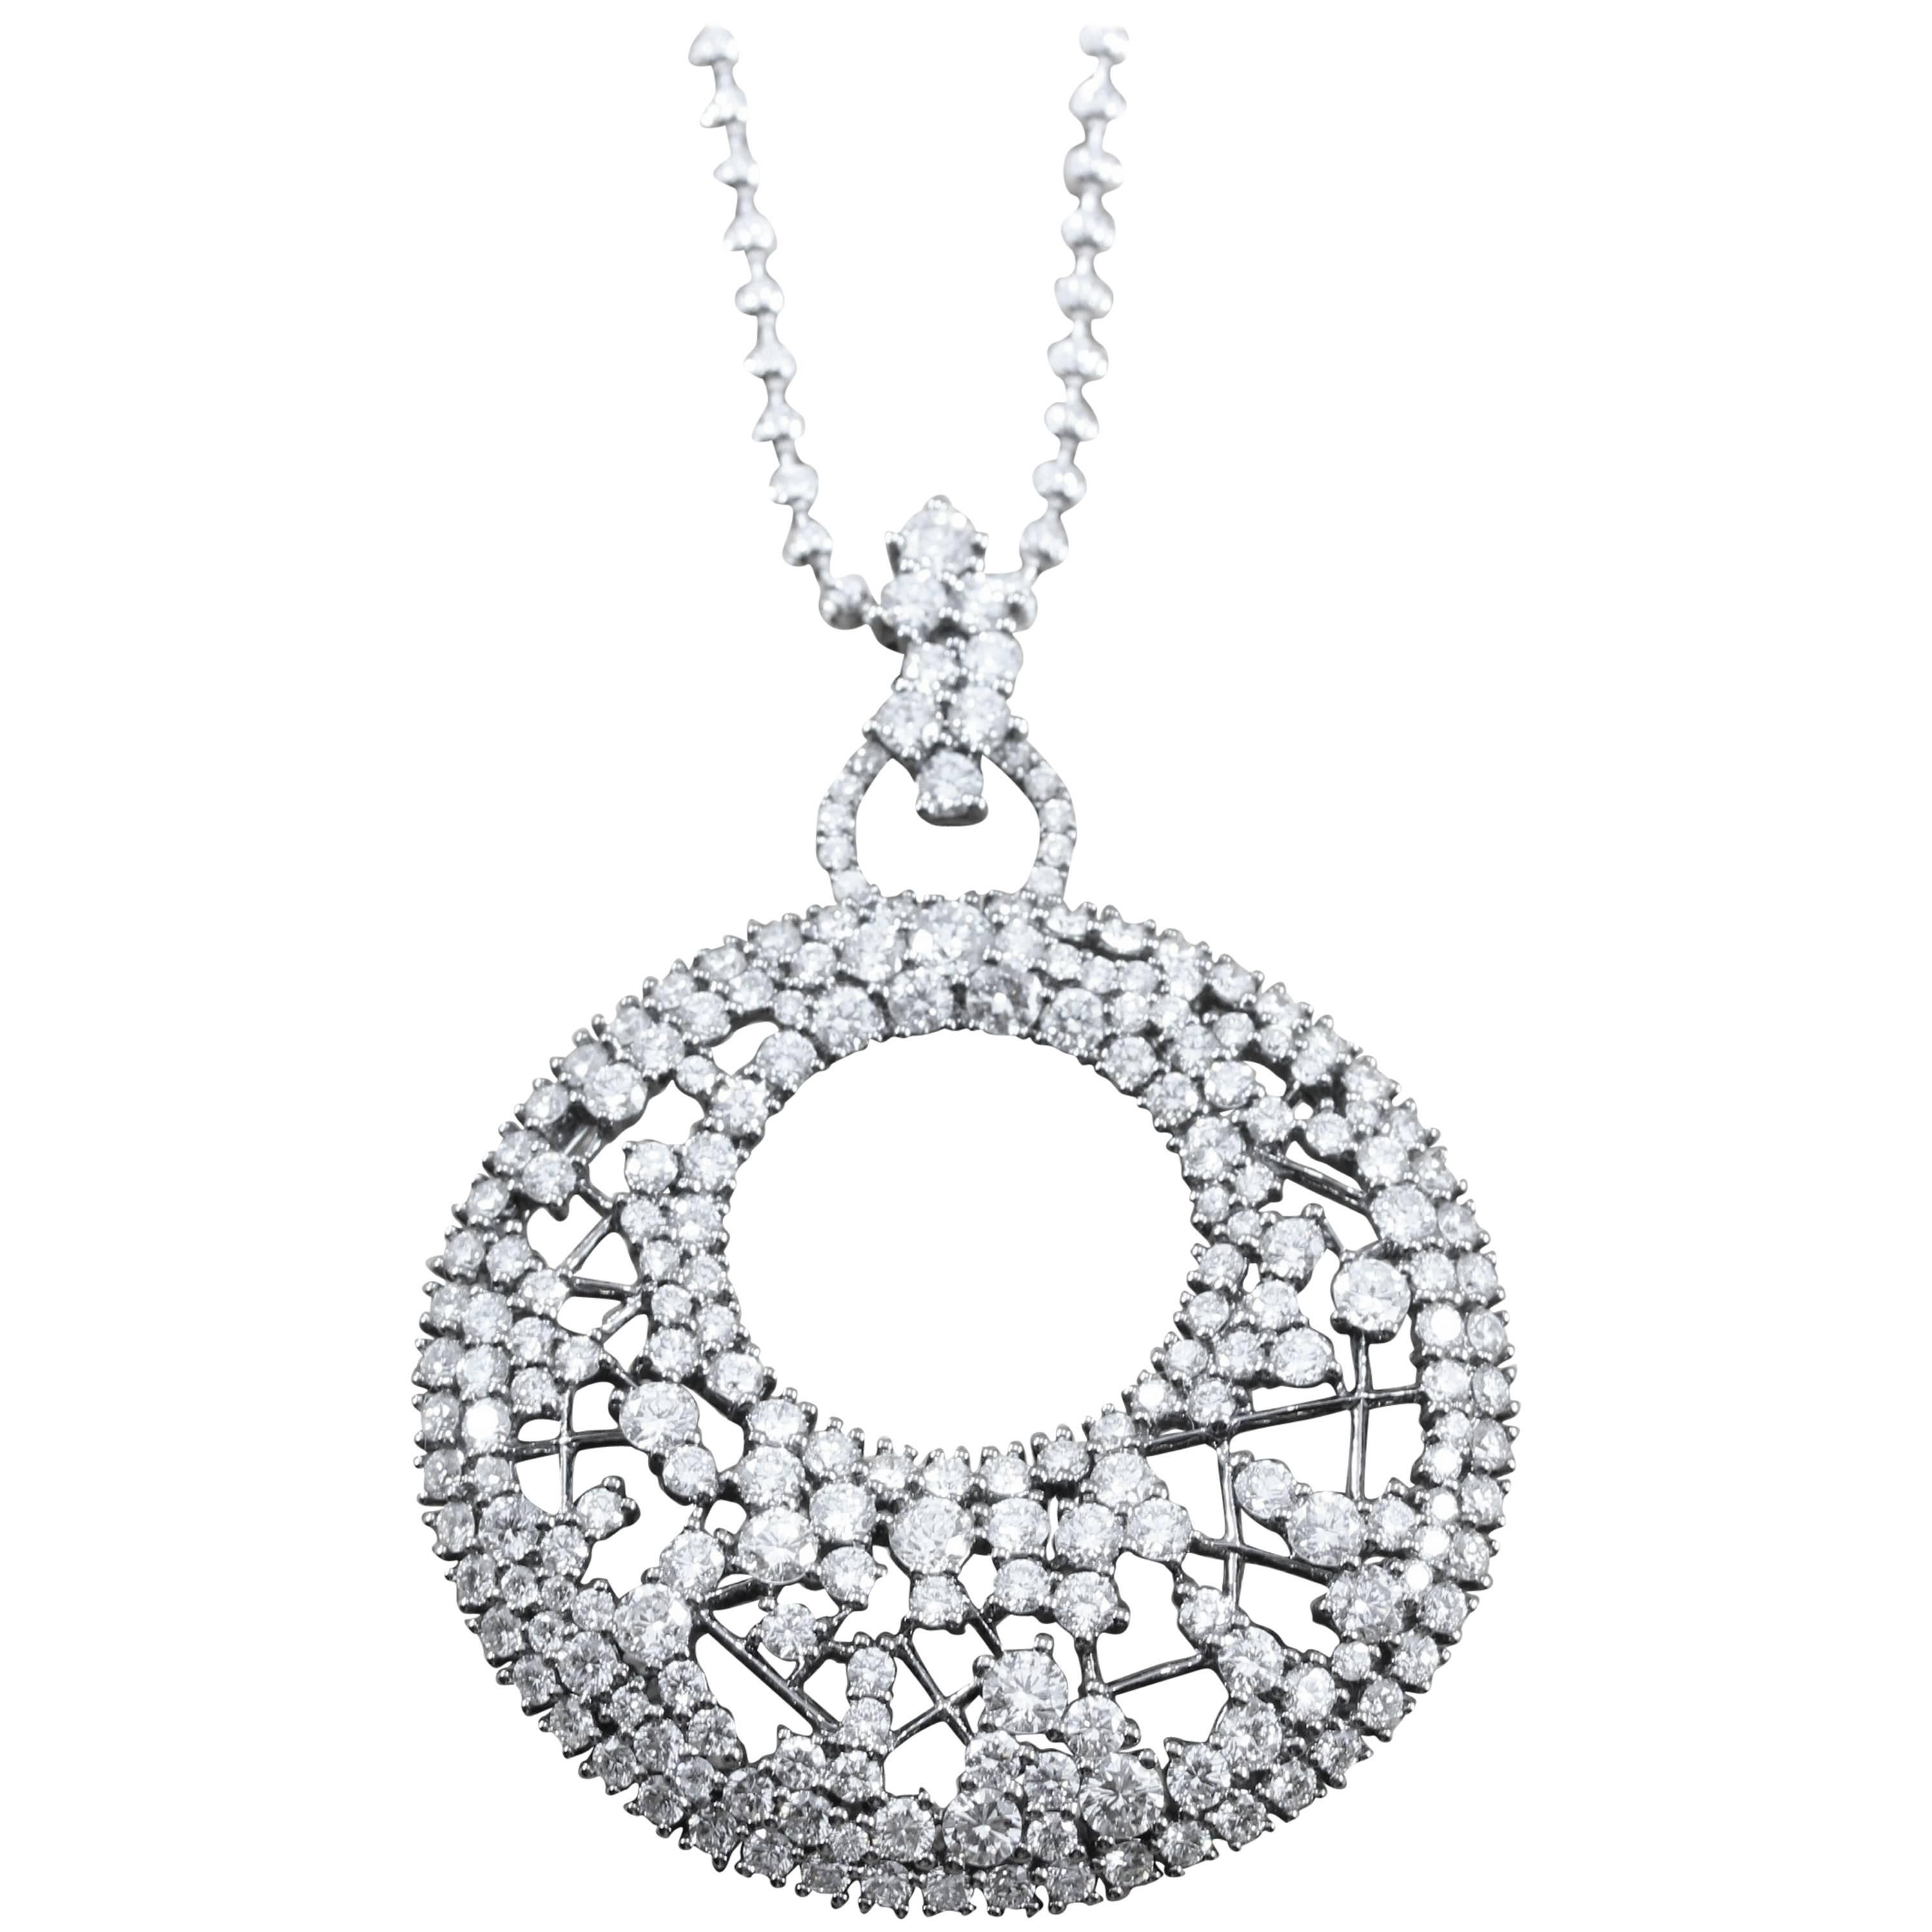 Diamond Cluster Design Black Rhodium Gold Pendant Necklace